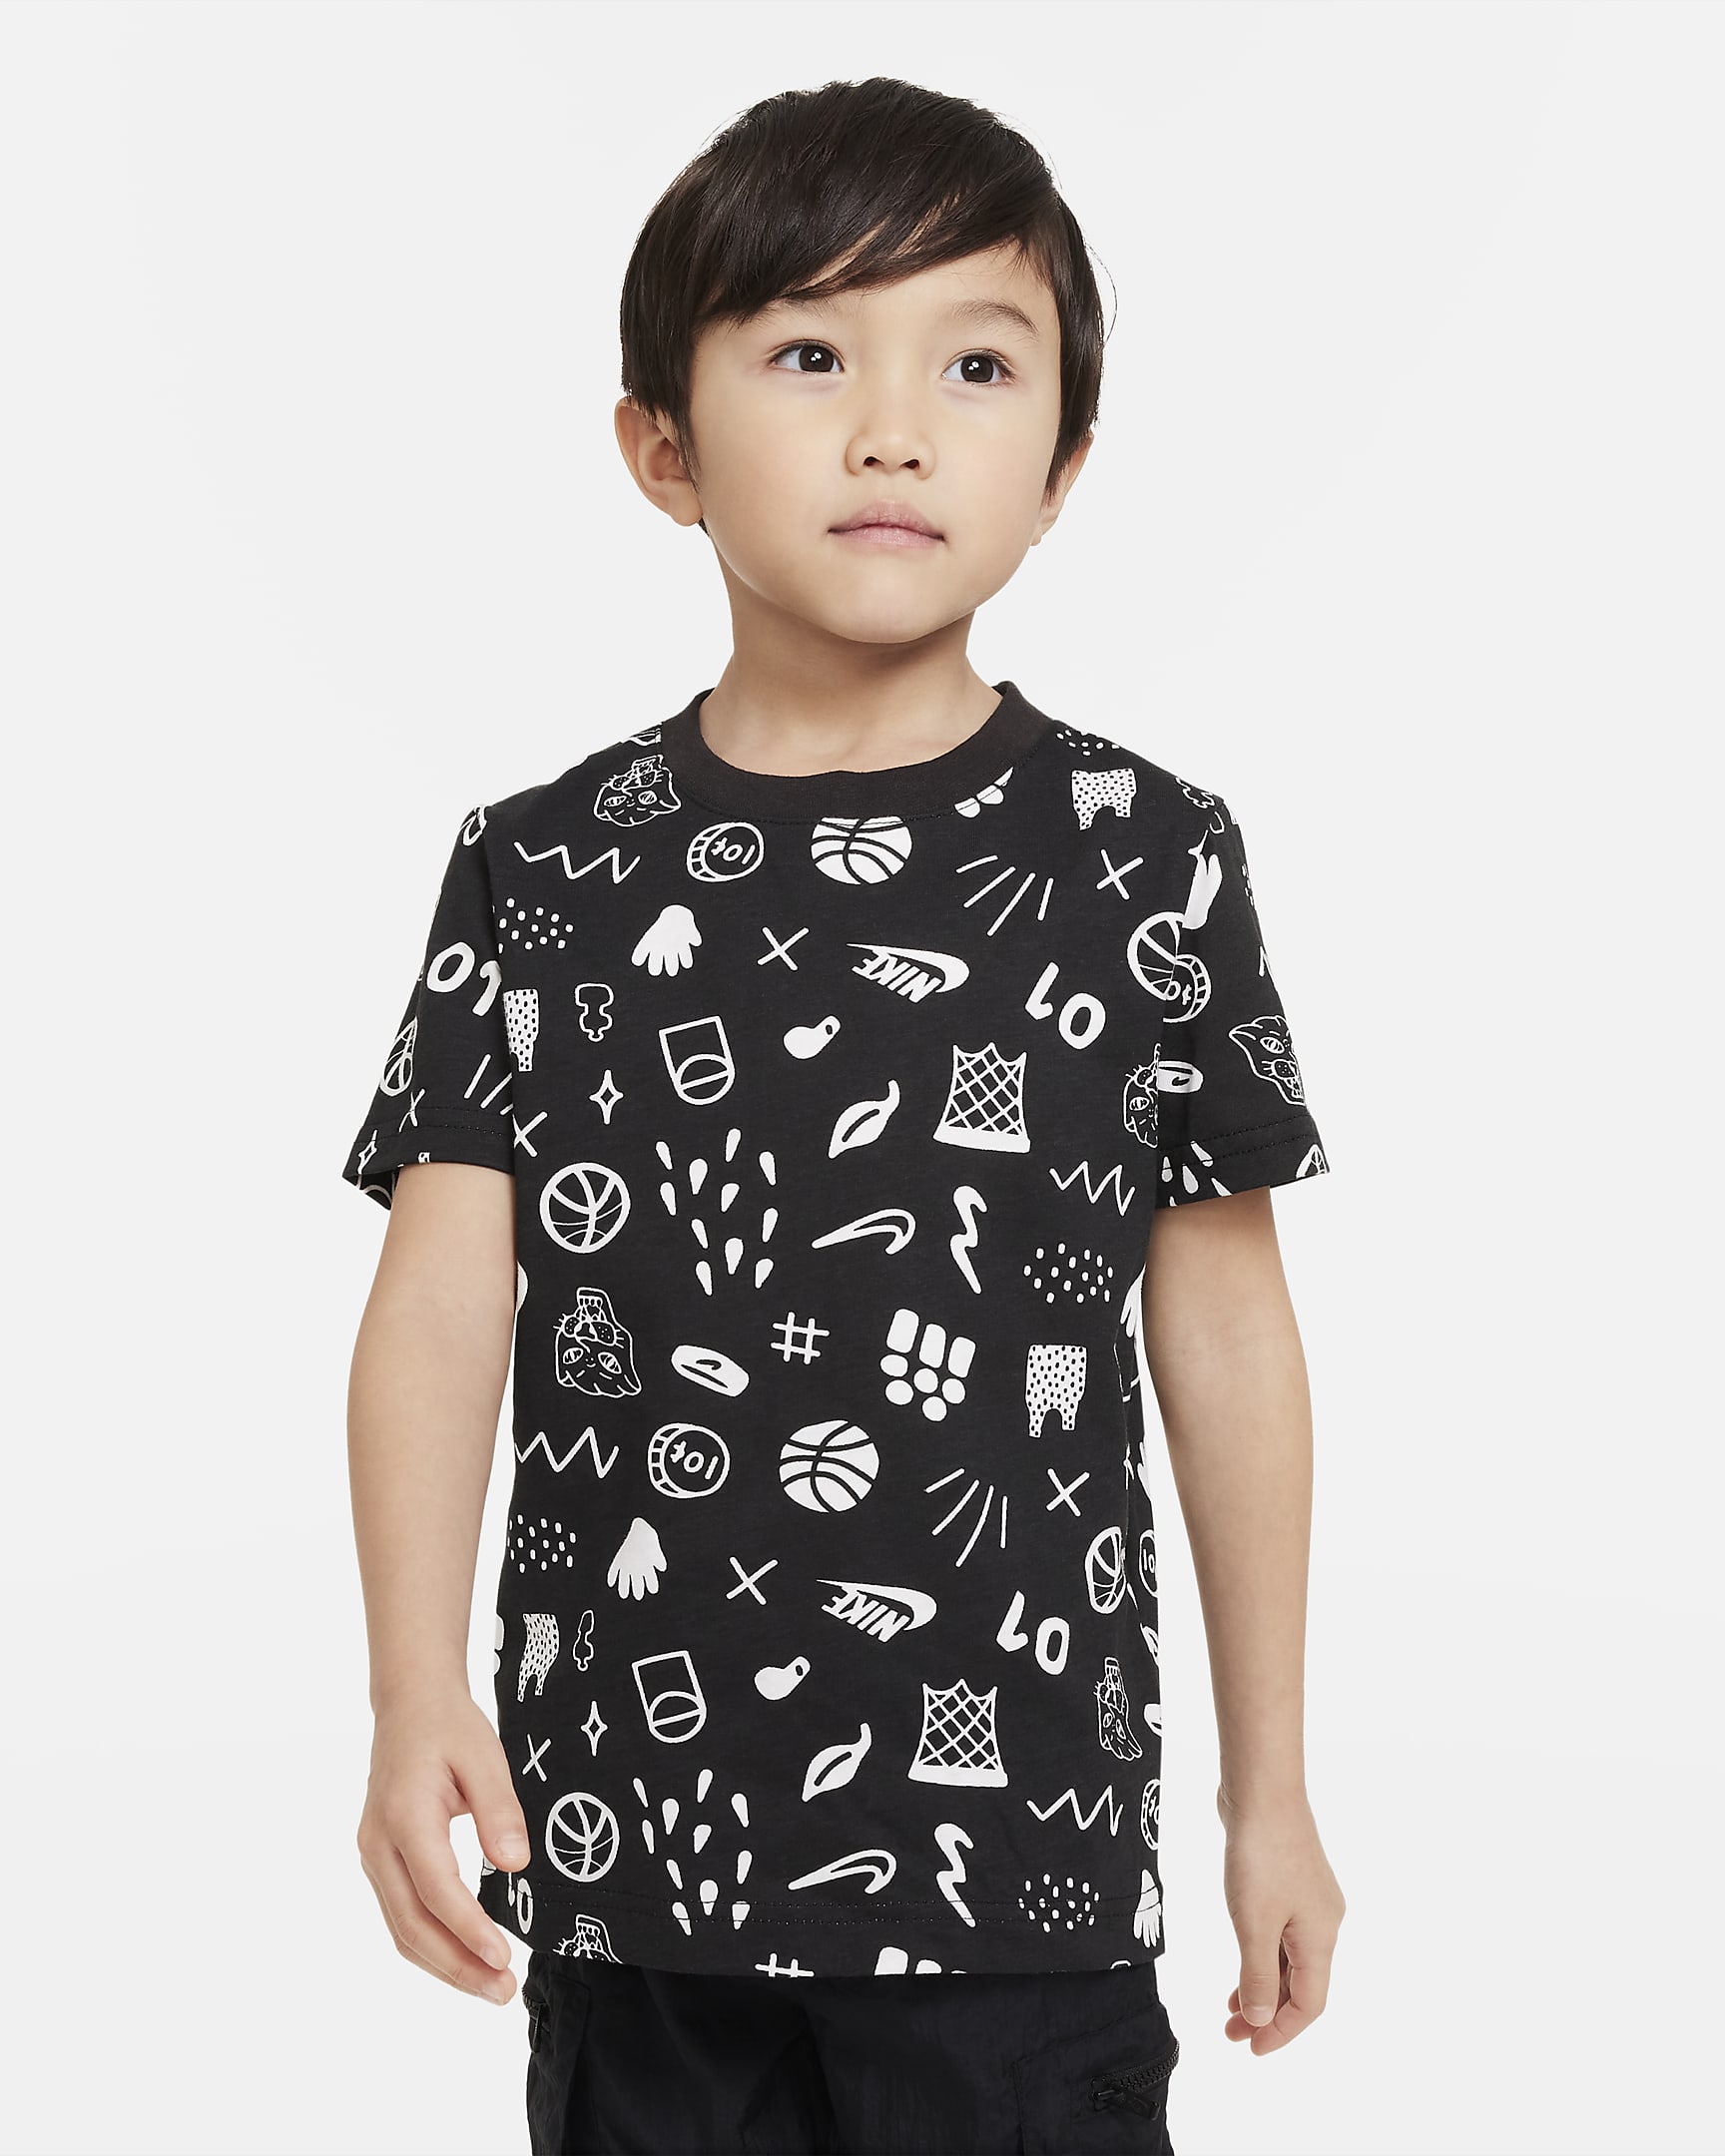 Nike Little Kids' Culture of Bball T-Shirt. Nike.com